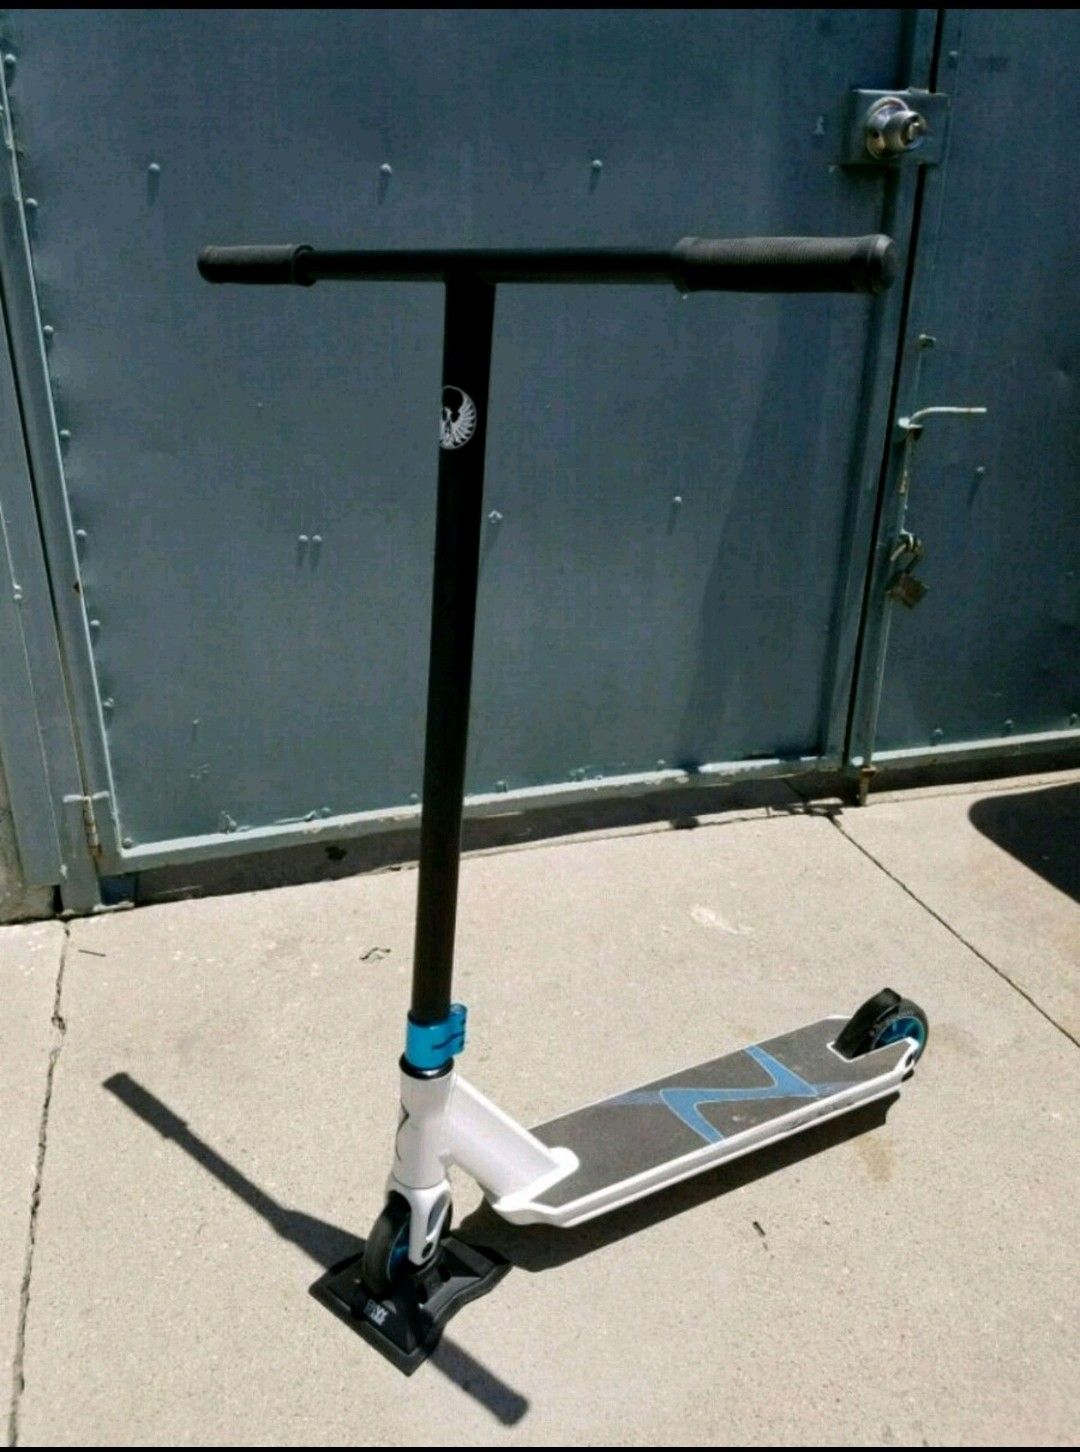 Pro stunt scooter